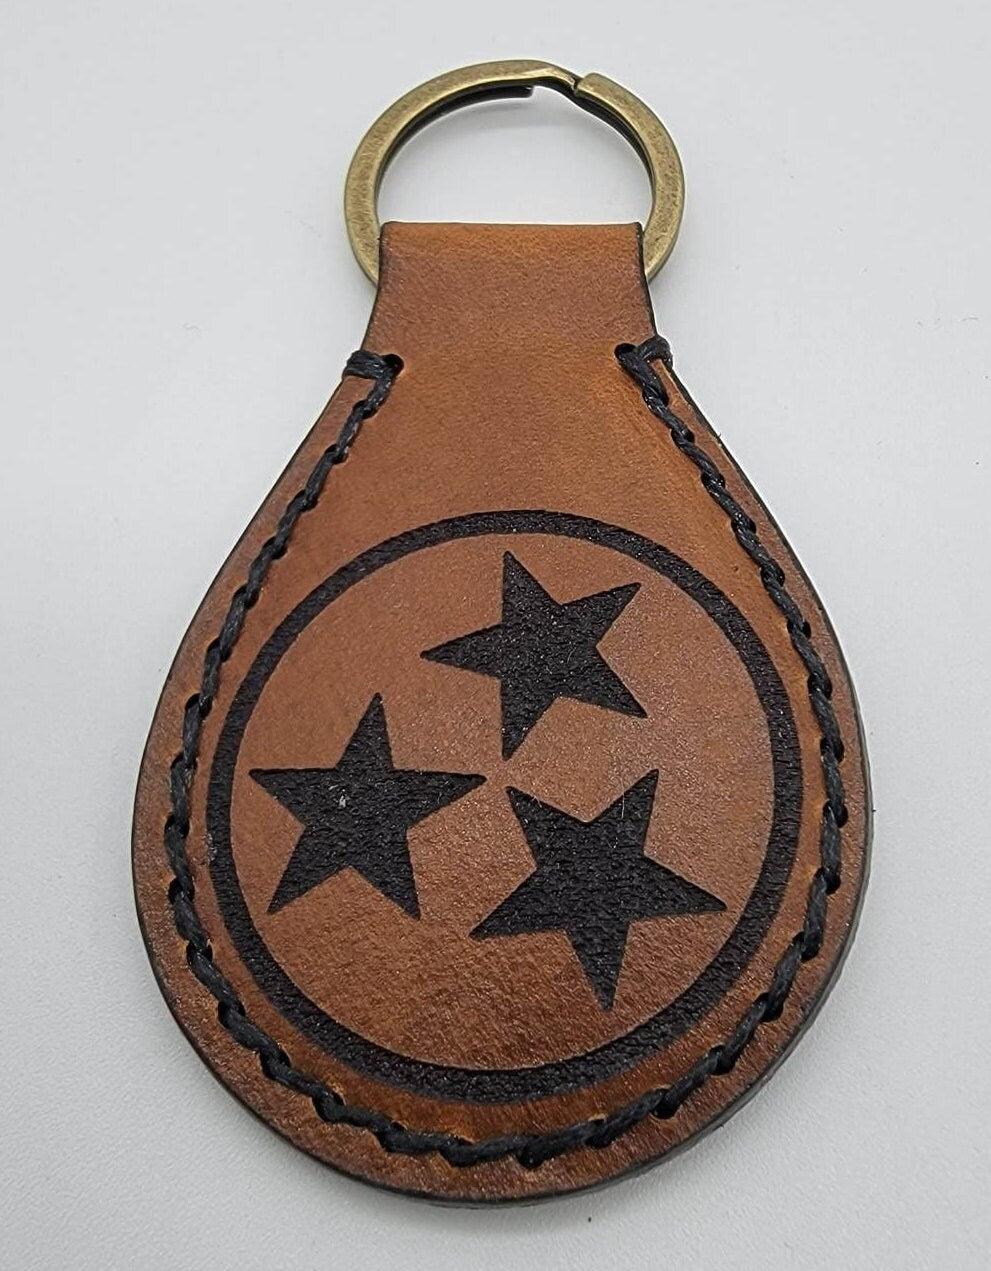 Tri Star Keychain - Tennessee State Flag Keychain